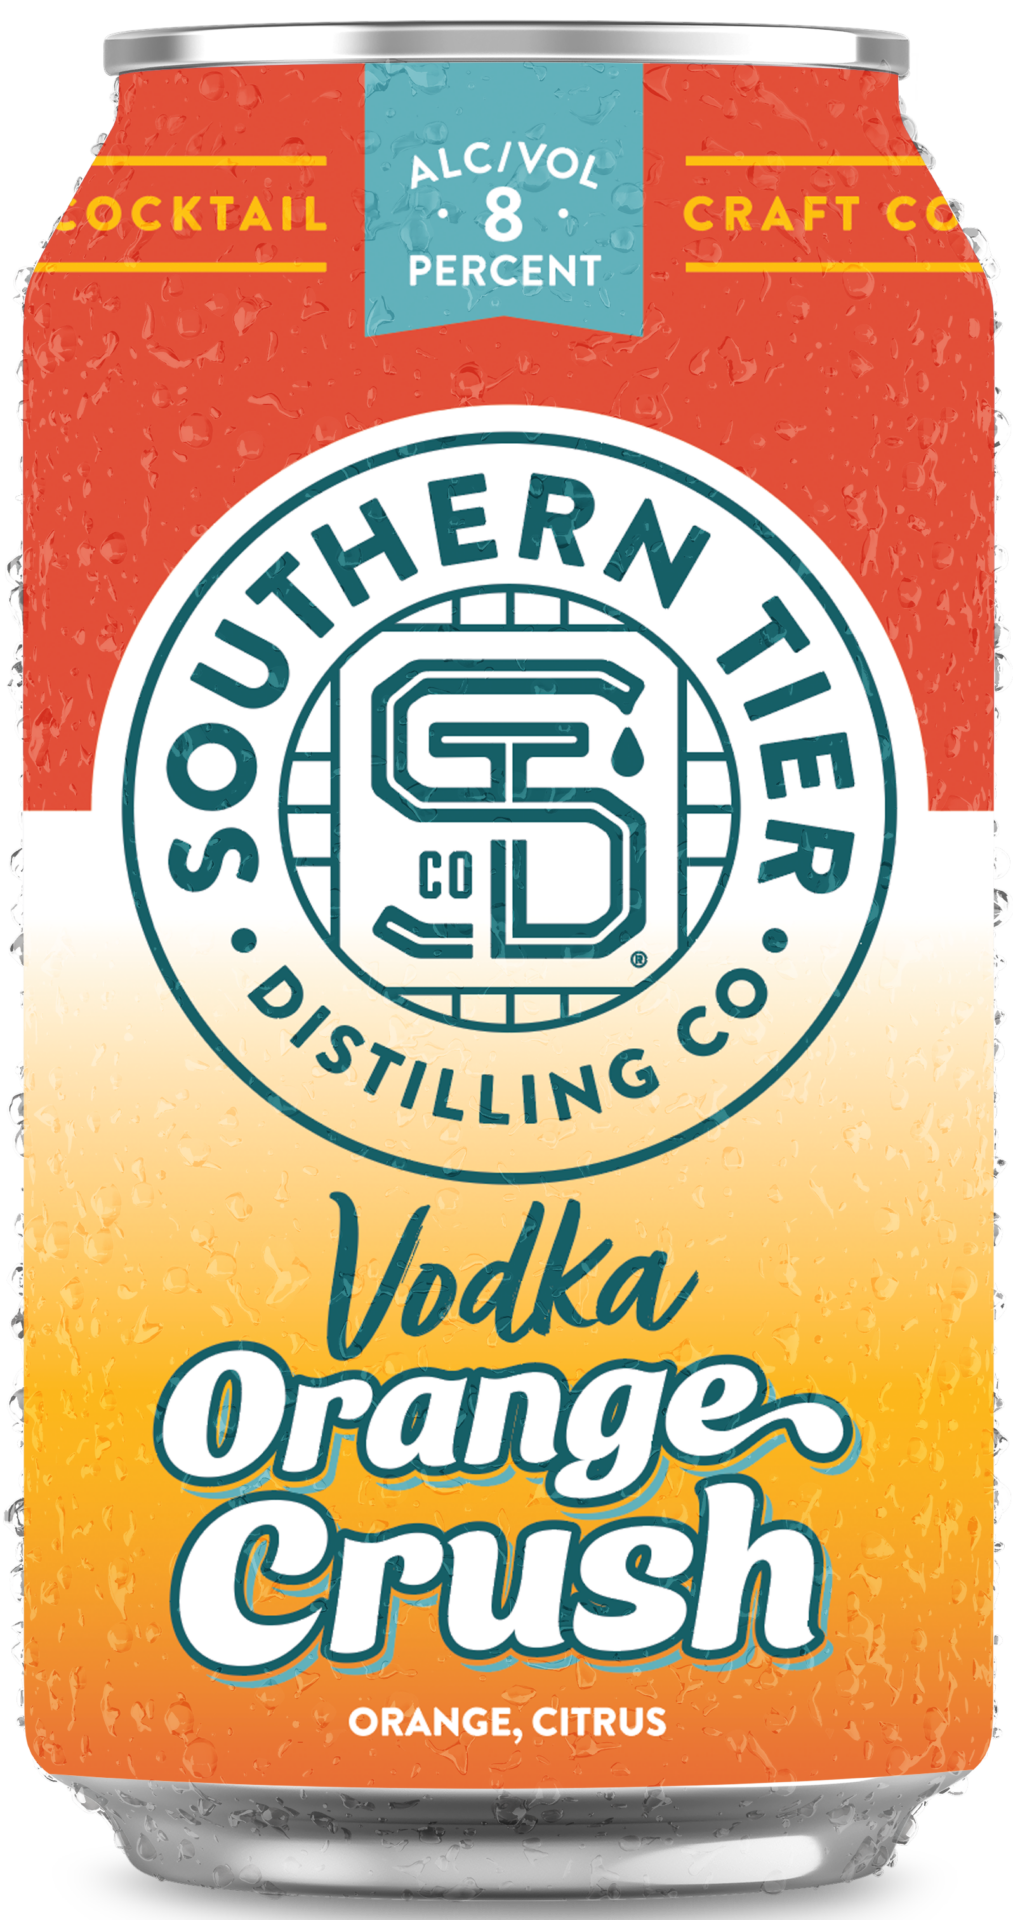 Vodka Orange Crush  Southern Tier Distilling